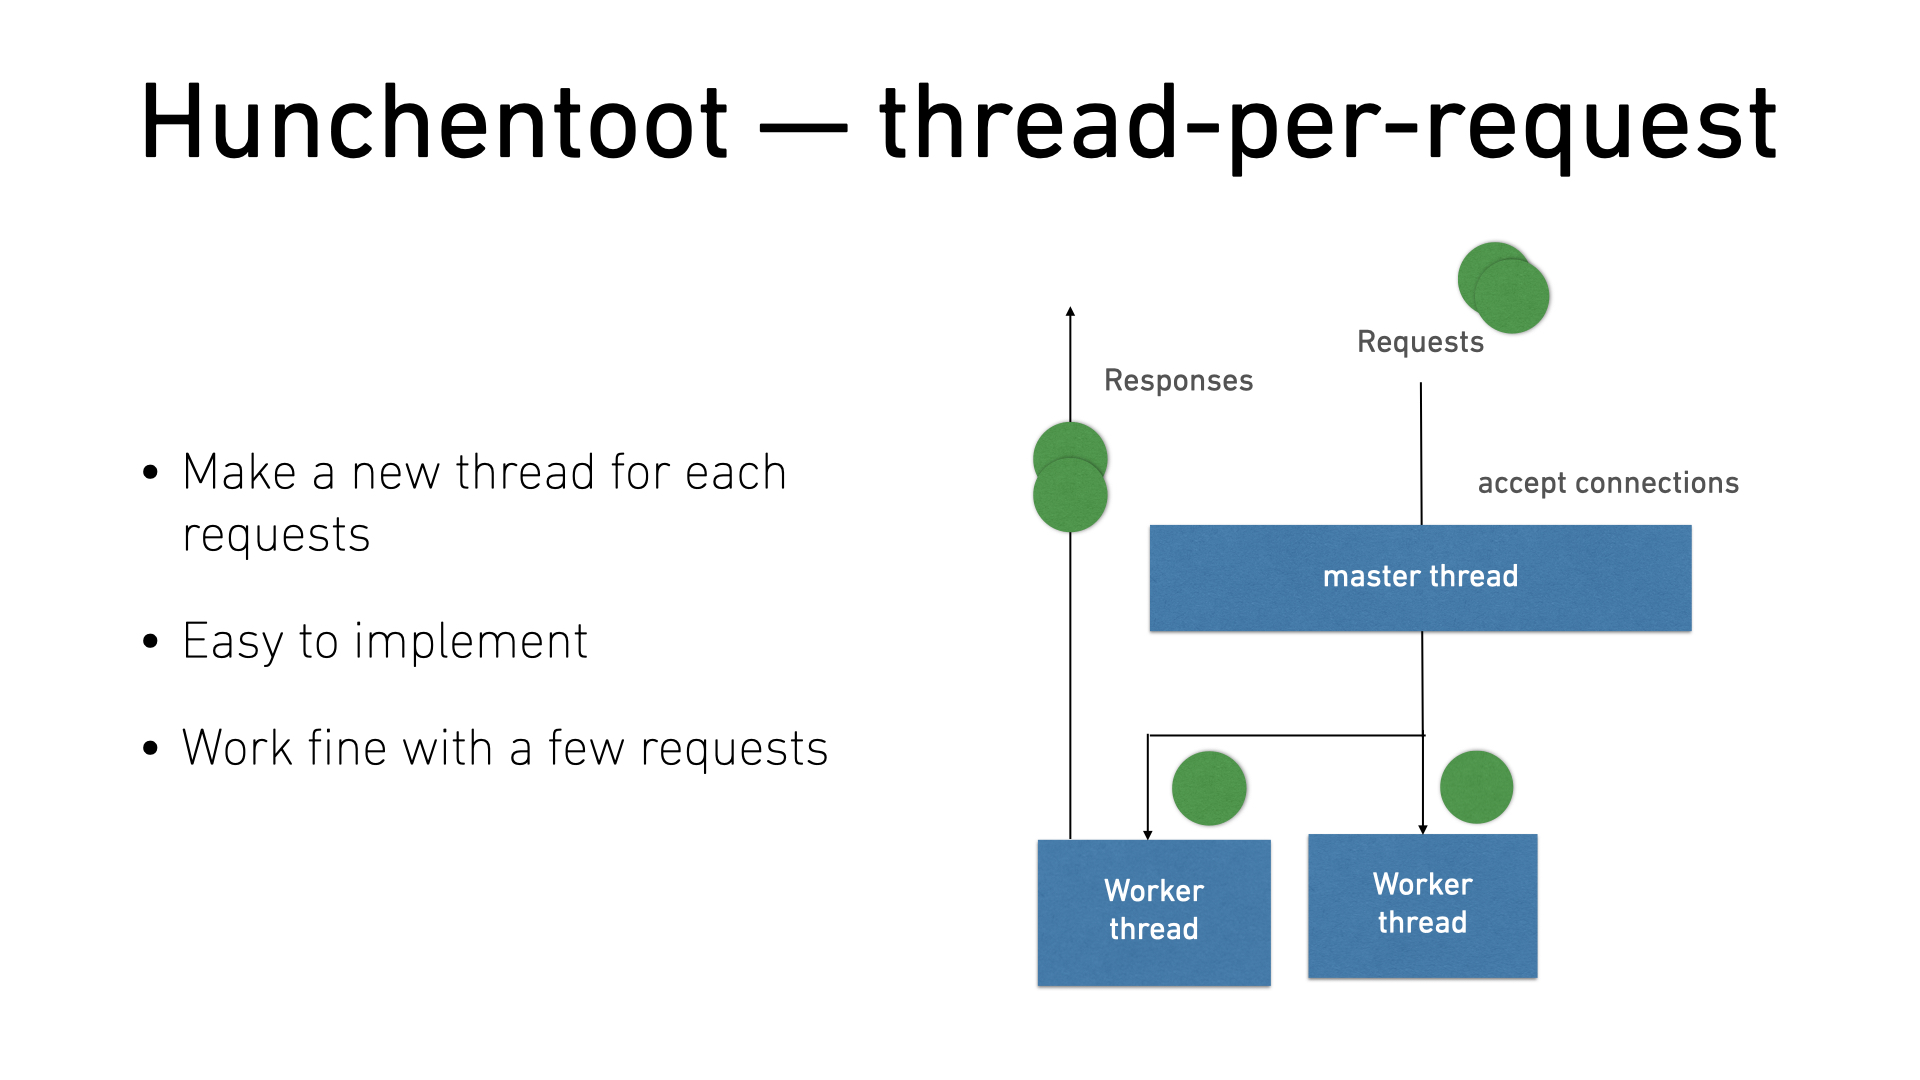 Hunchentoot thread-per-request architecture